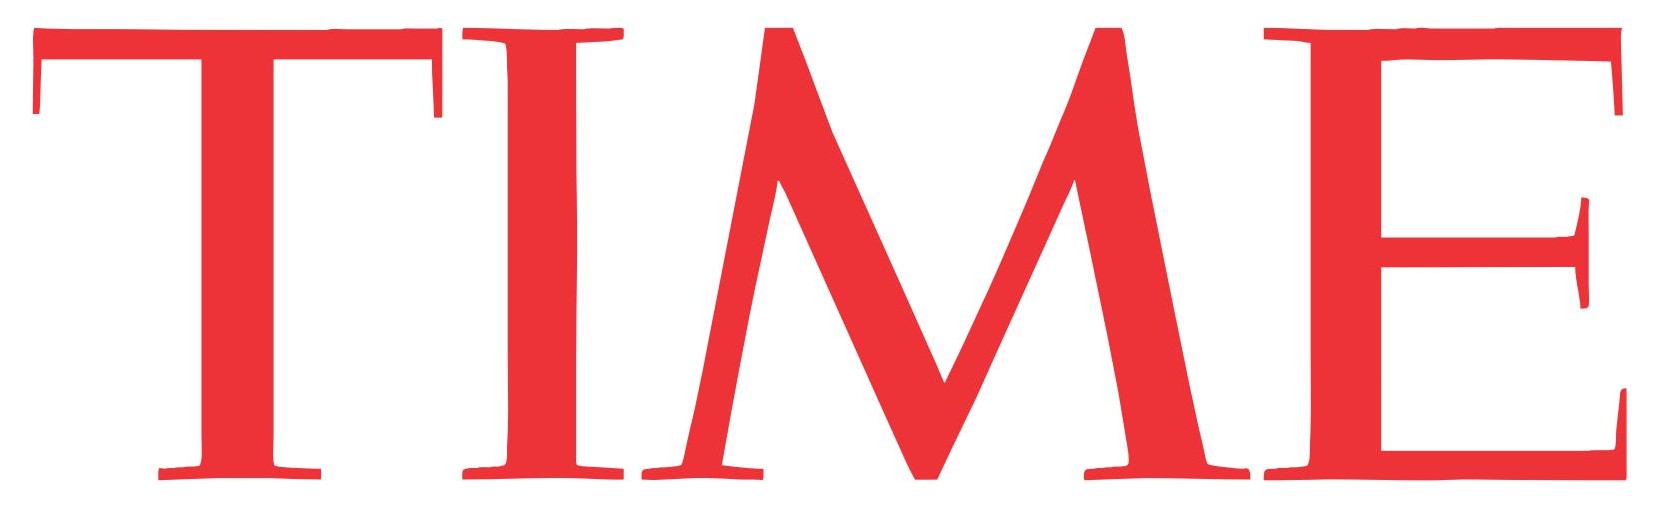 time-magazine-logo